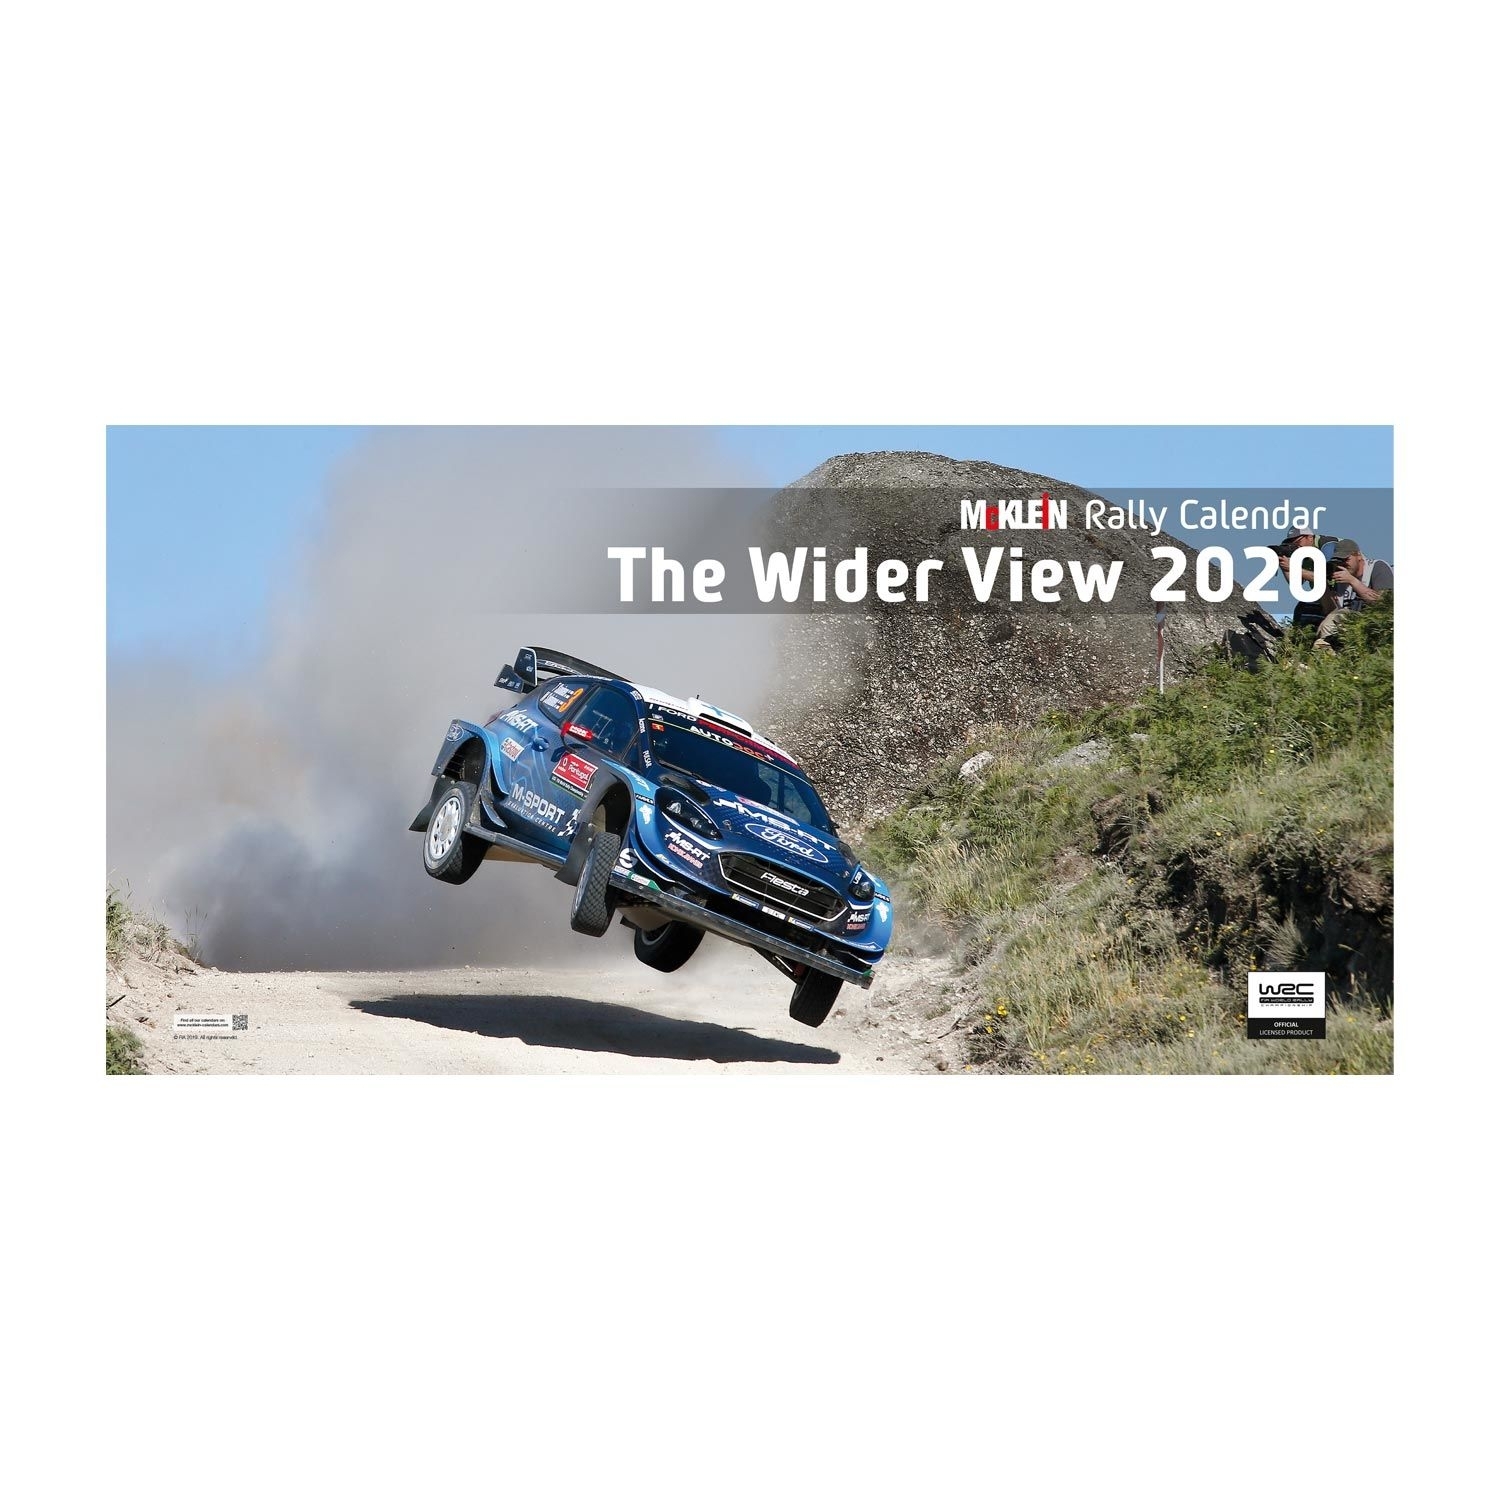 2020 Mcklein Rally Calendar - The Wider View | Calendars